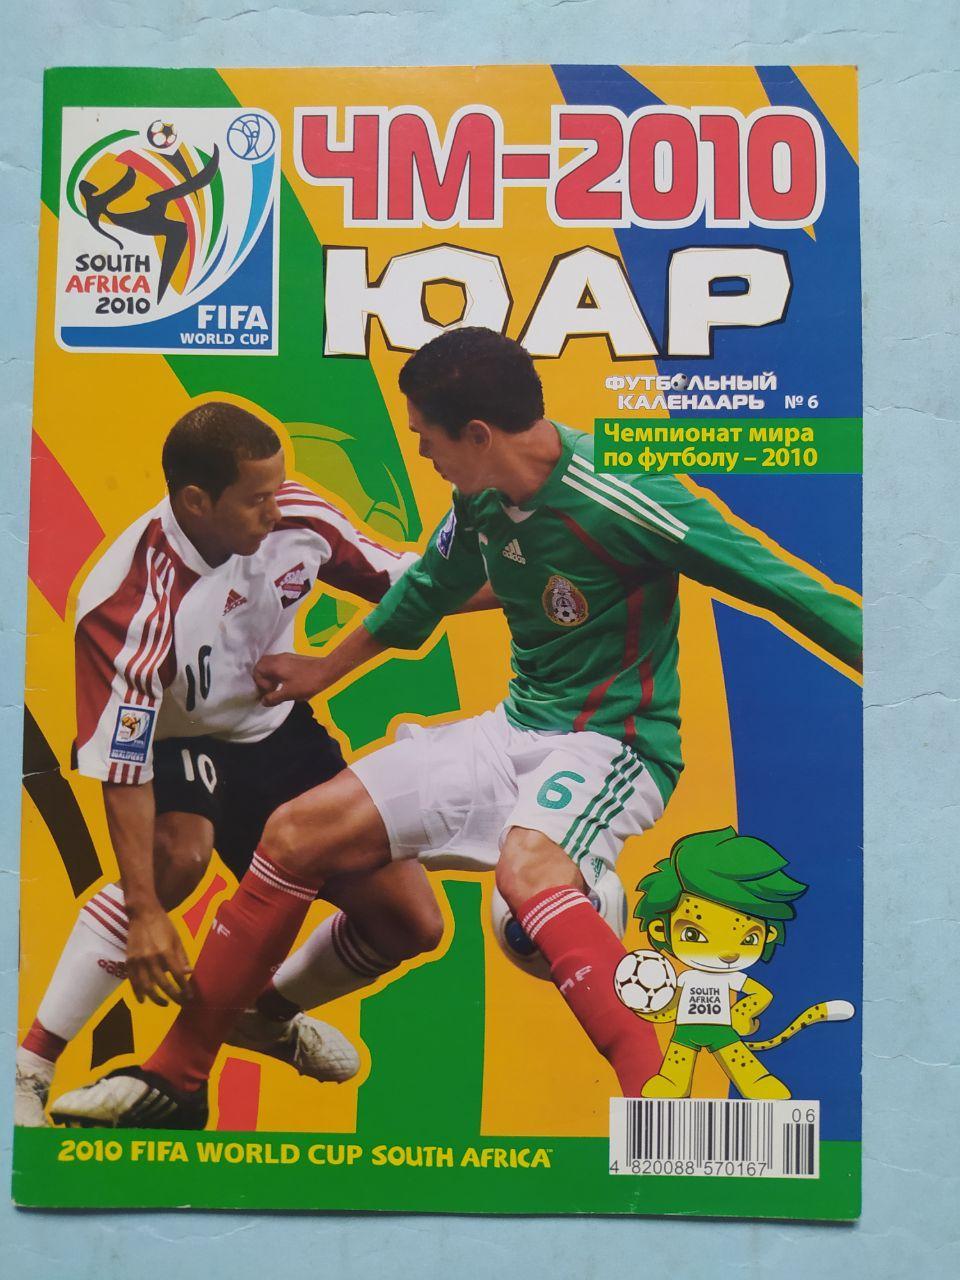 Футбольній календарь ЧМ-2010 ЮАР чемпионат мира по футболу - 2010